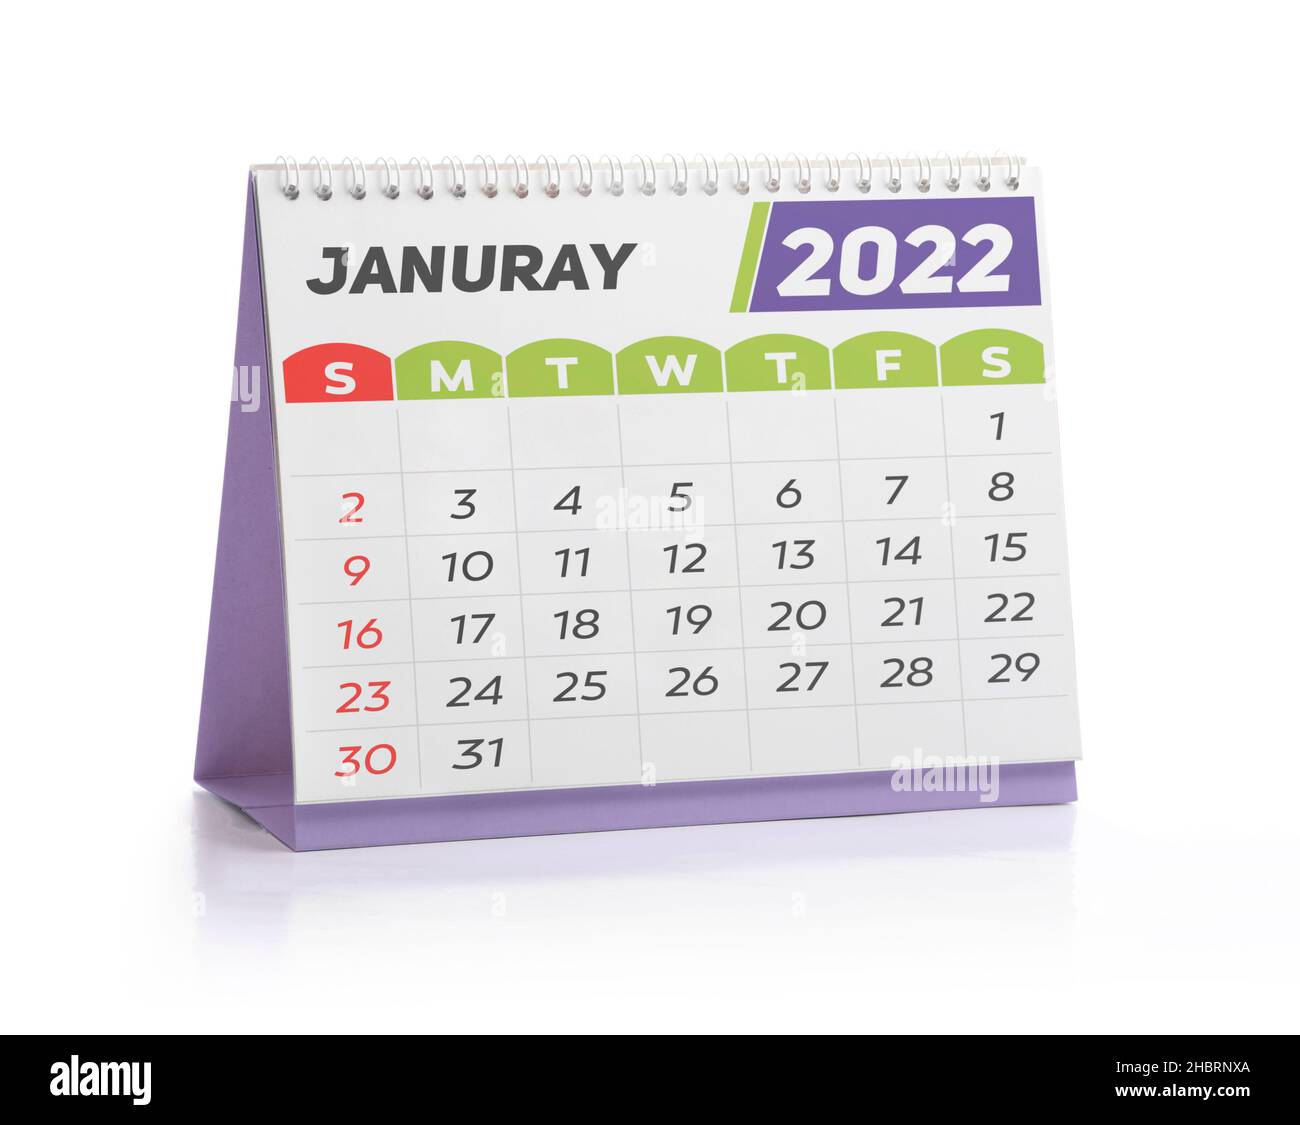 January White Office Calendar 2022 Isolated on White Stock Photo